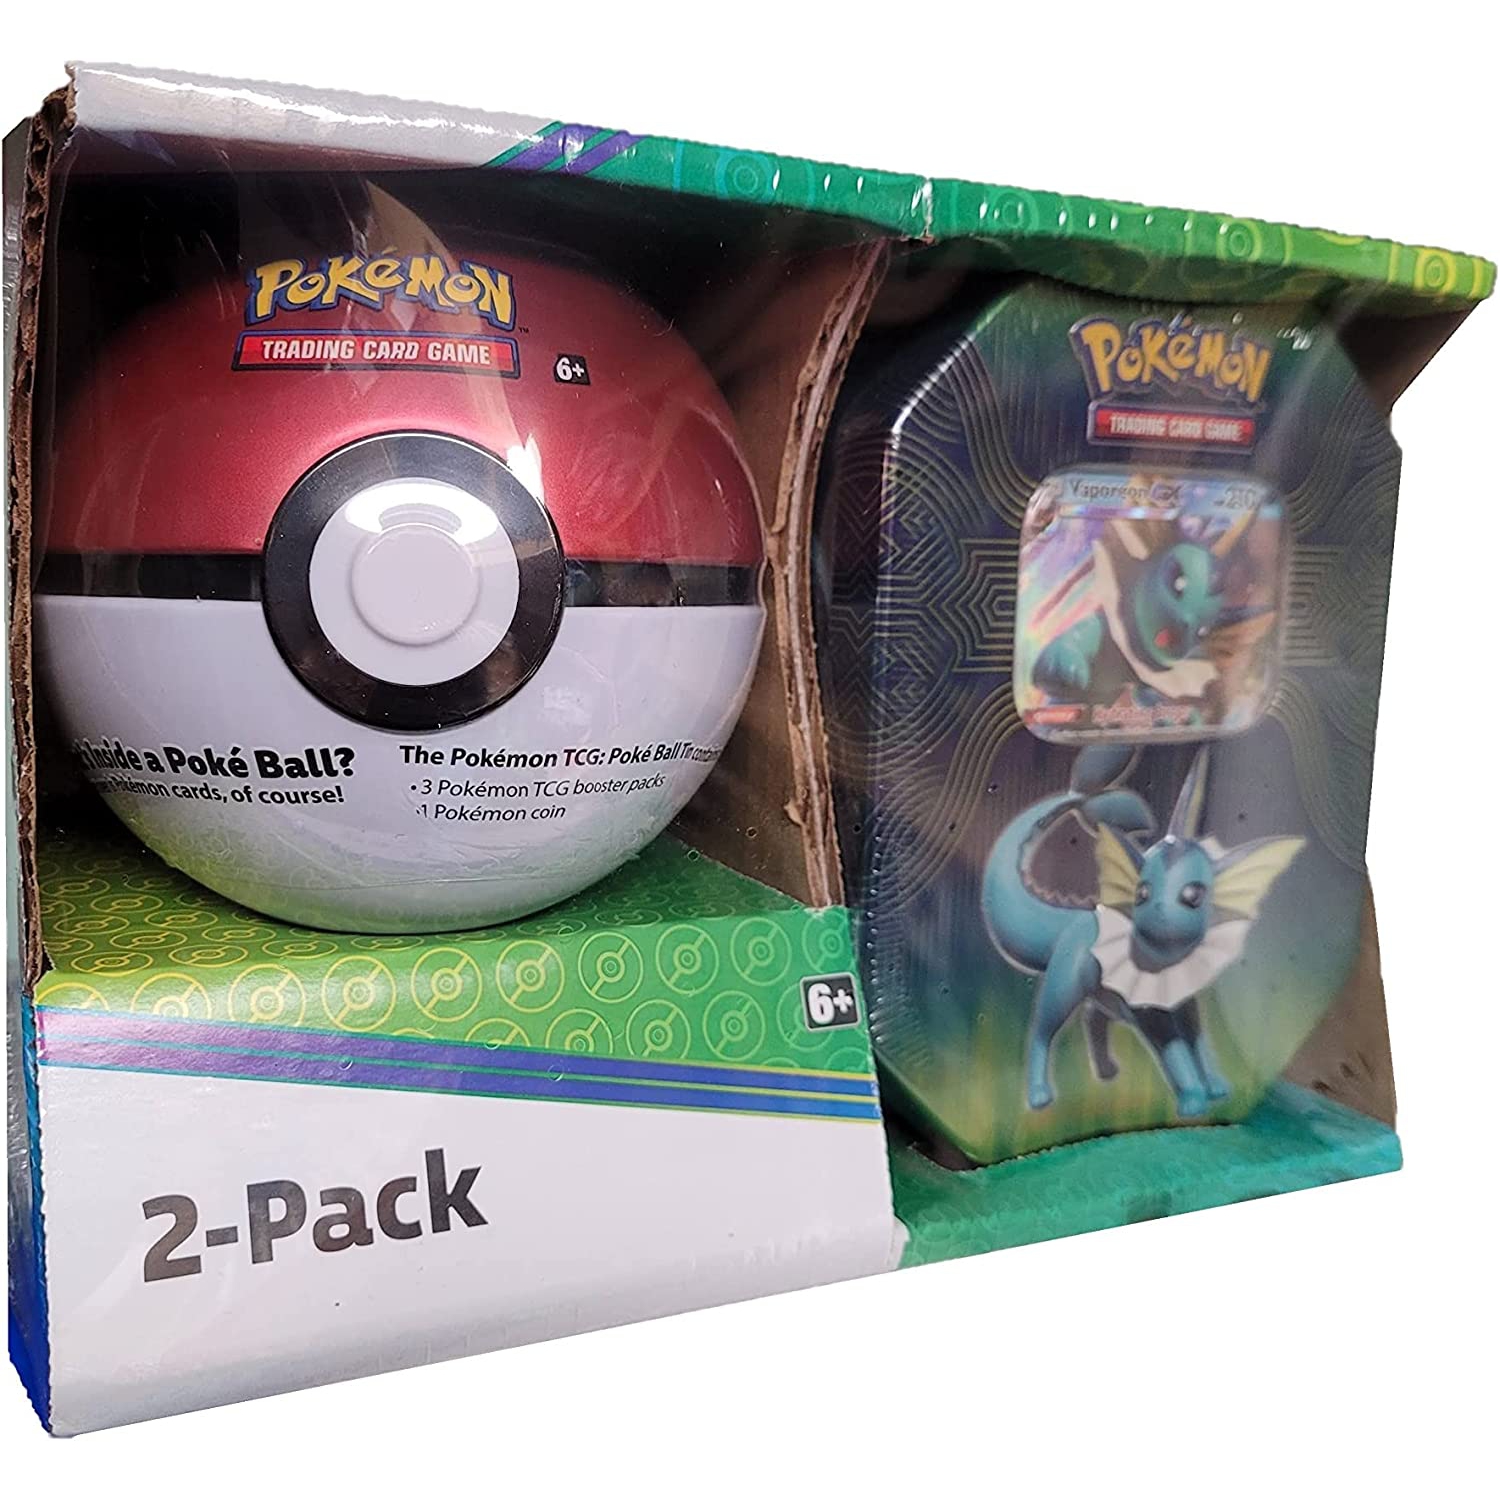 Pokemon GX Tin and Pokeball 2 Pack Combo - Vaporeon